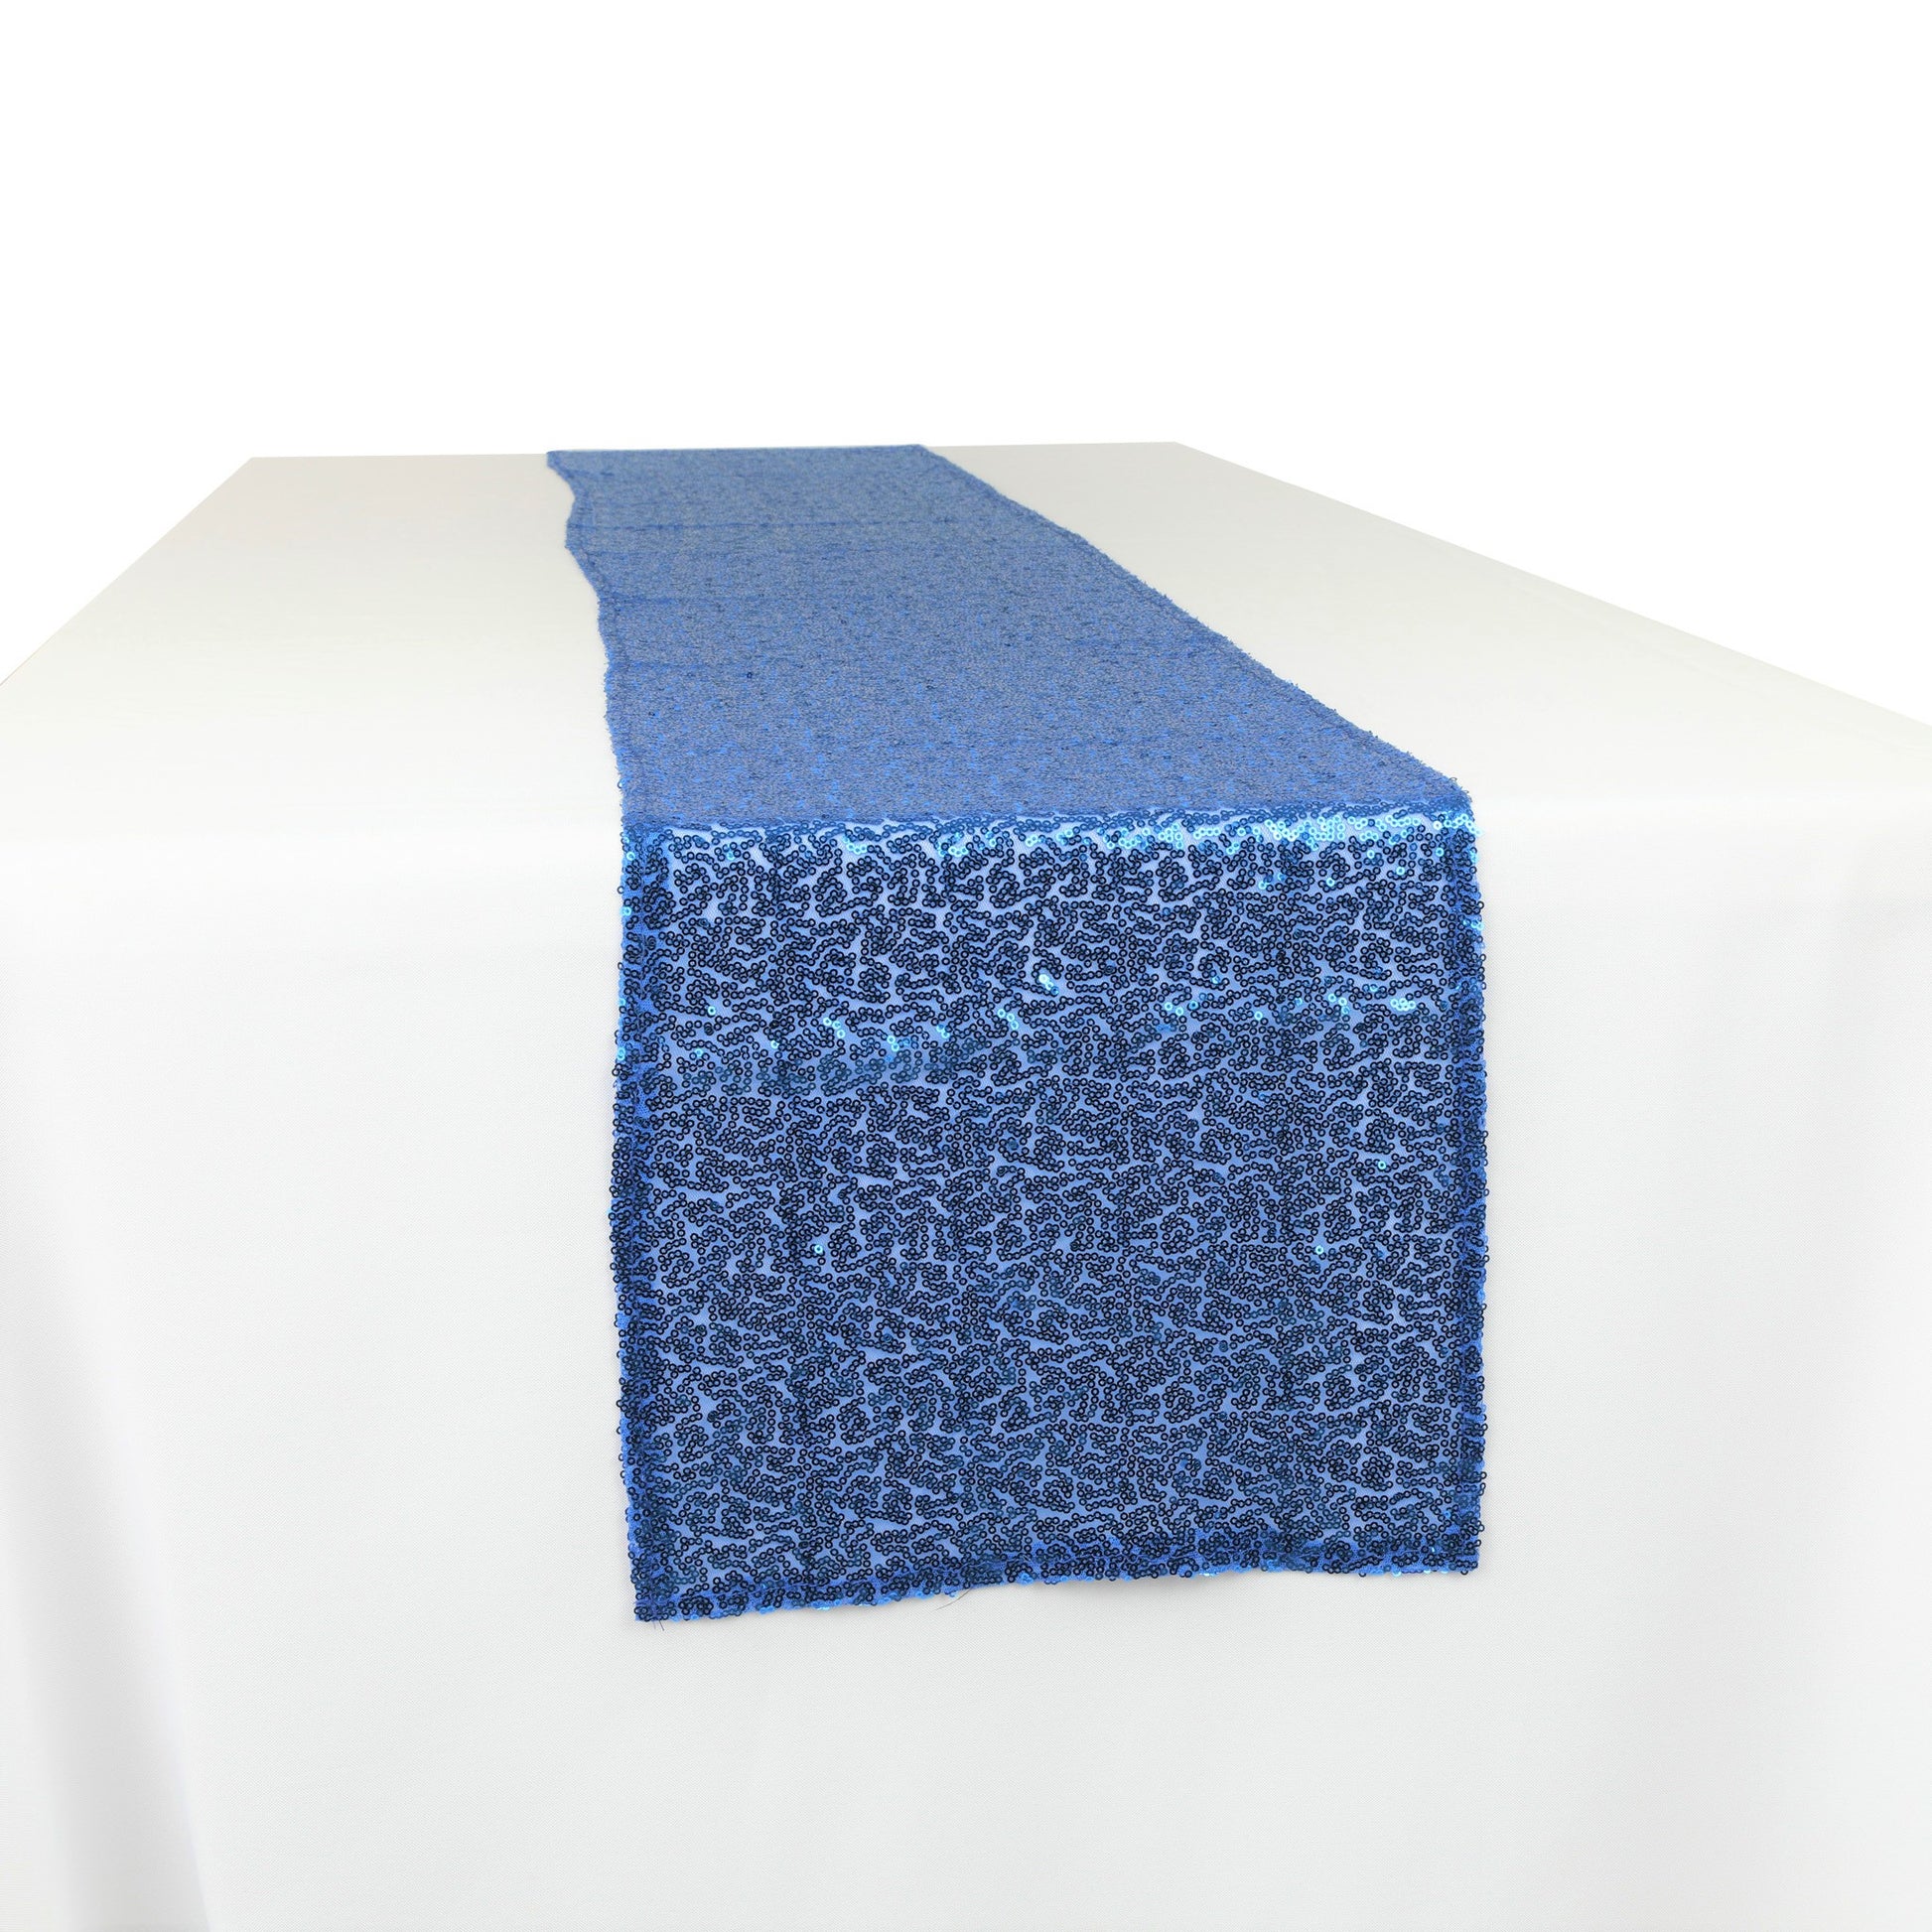 Glitz Sequin Mesh Net Table Runner 12"x108" - Royal Blue